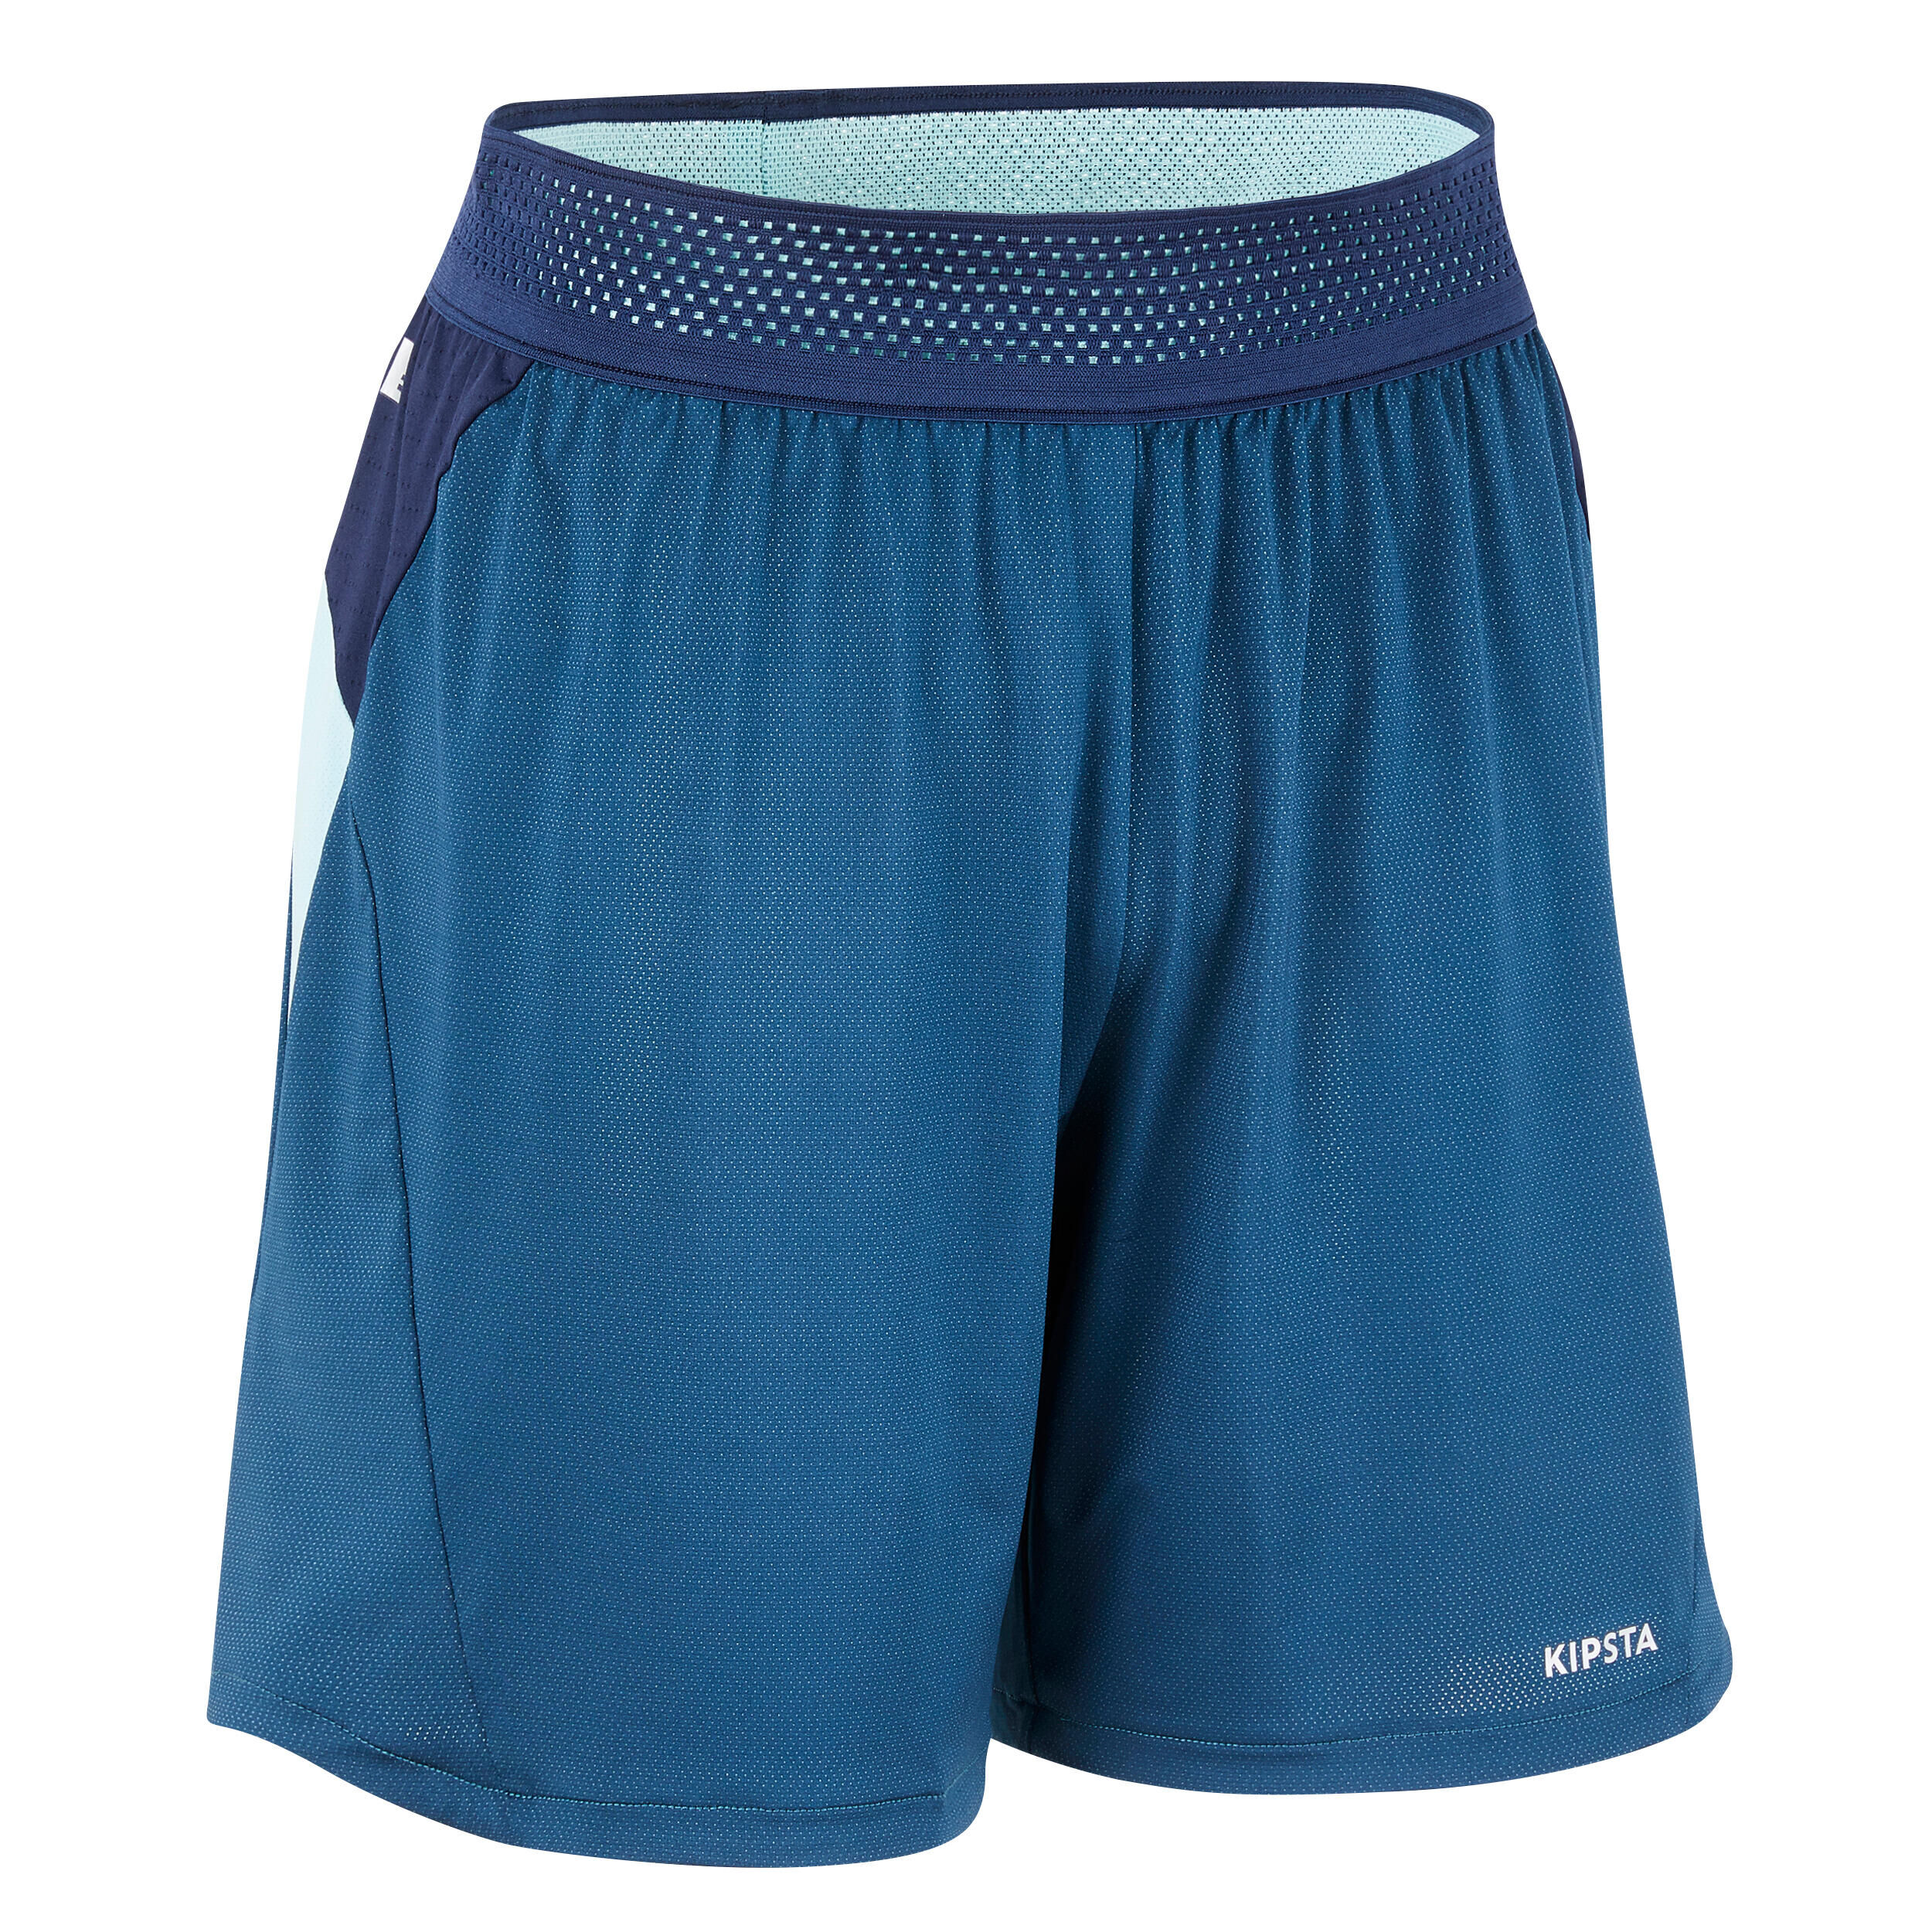 KIPSTA Women's Football Shorts - Blue